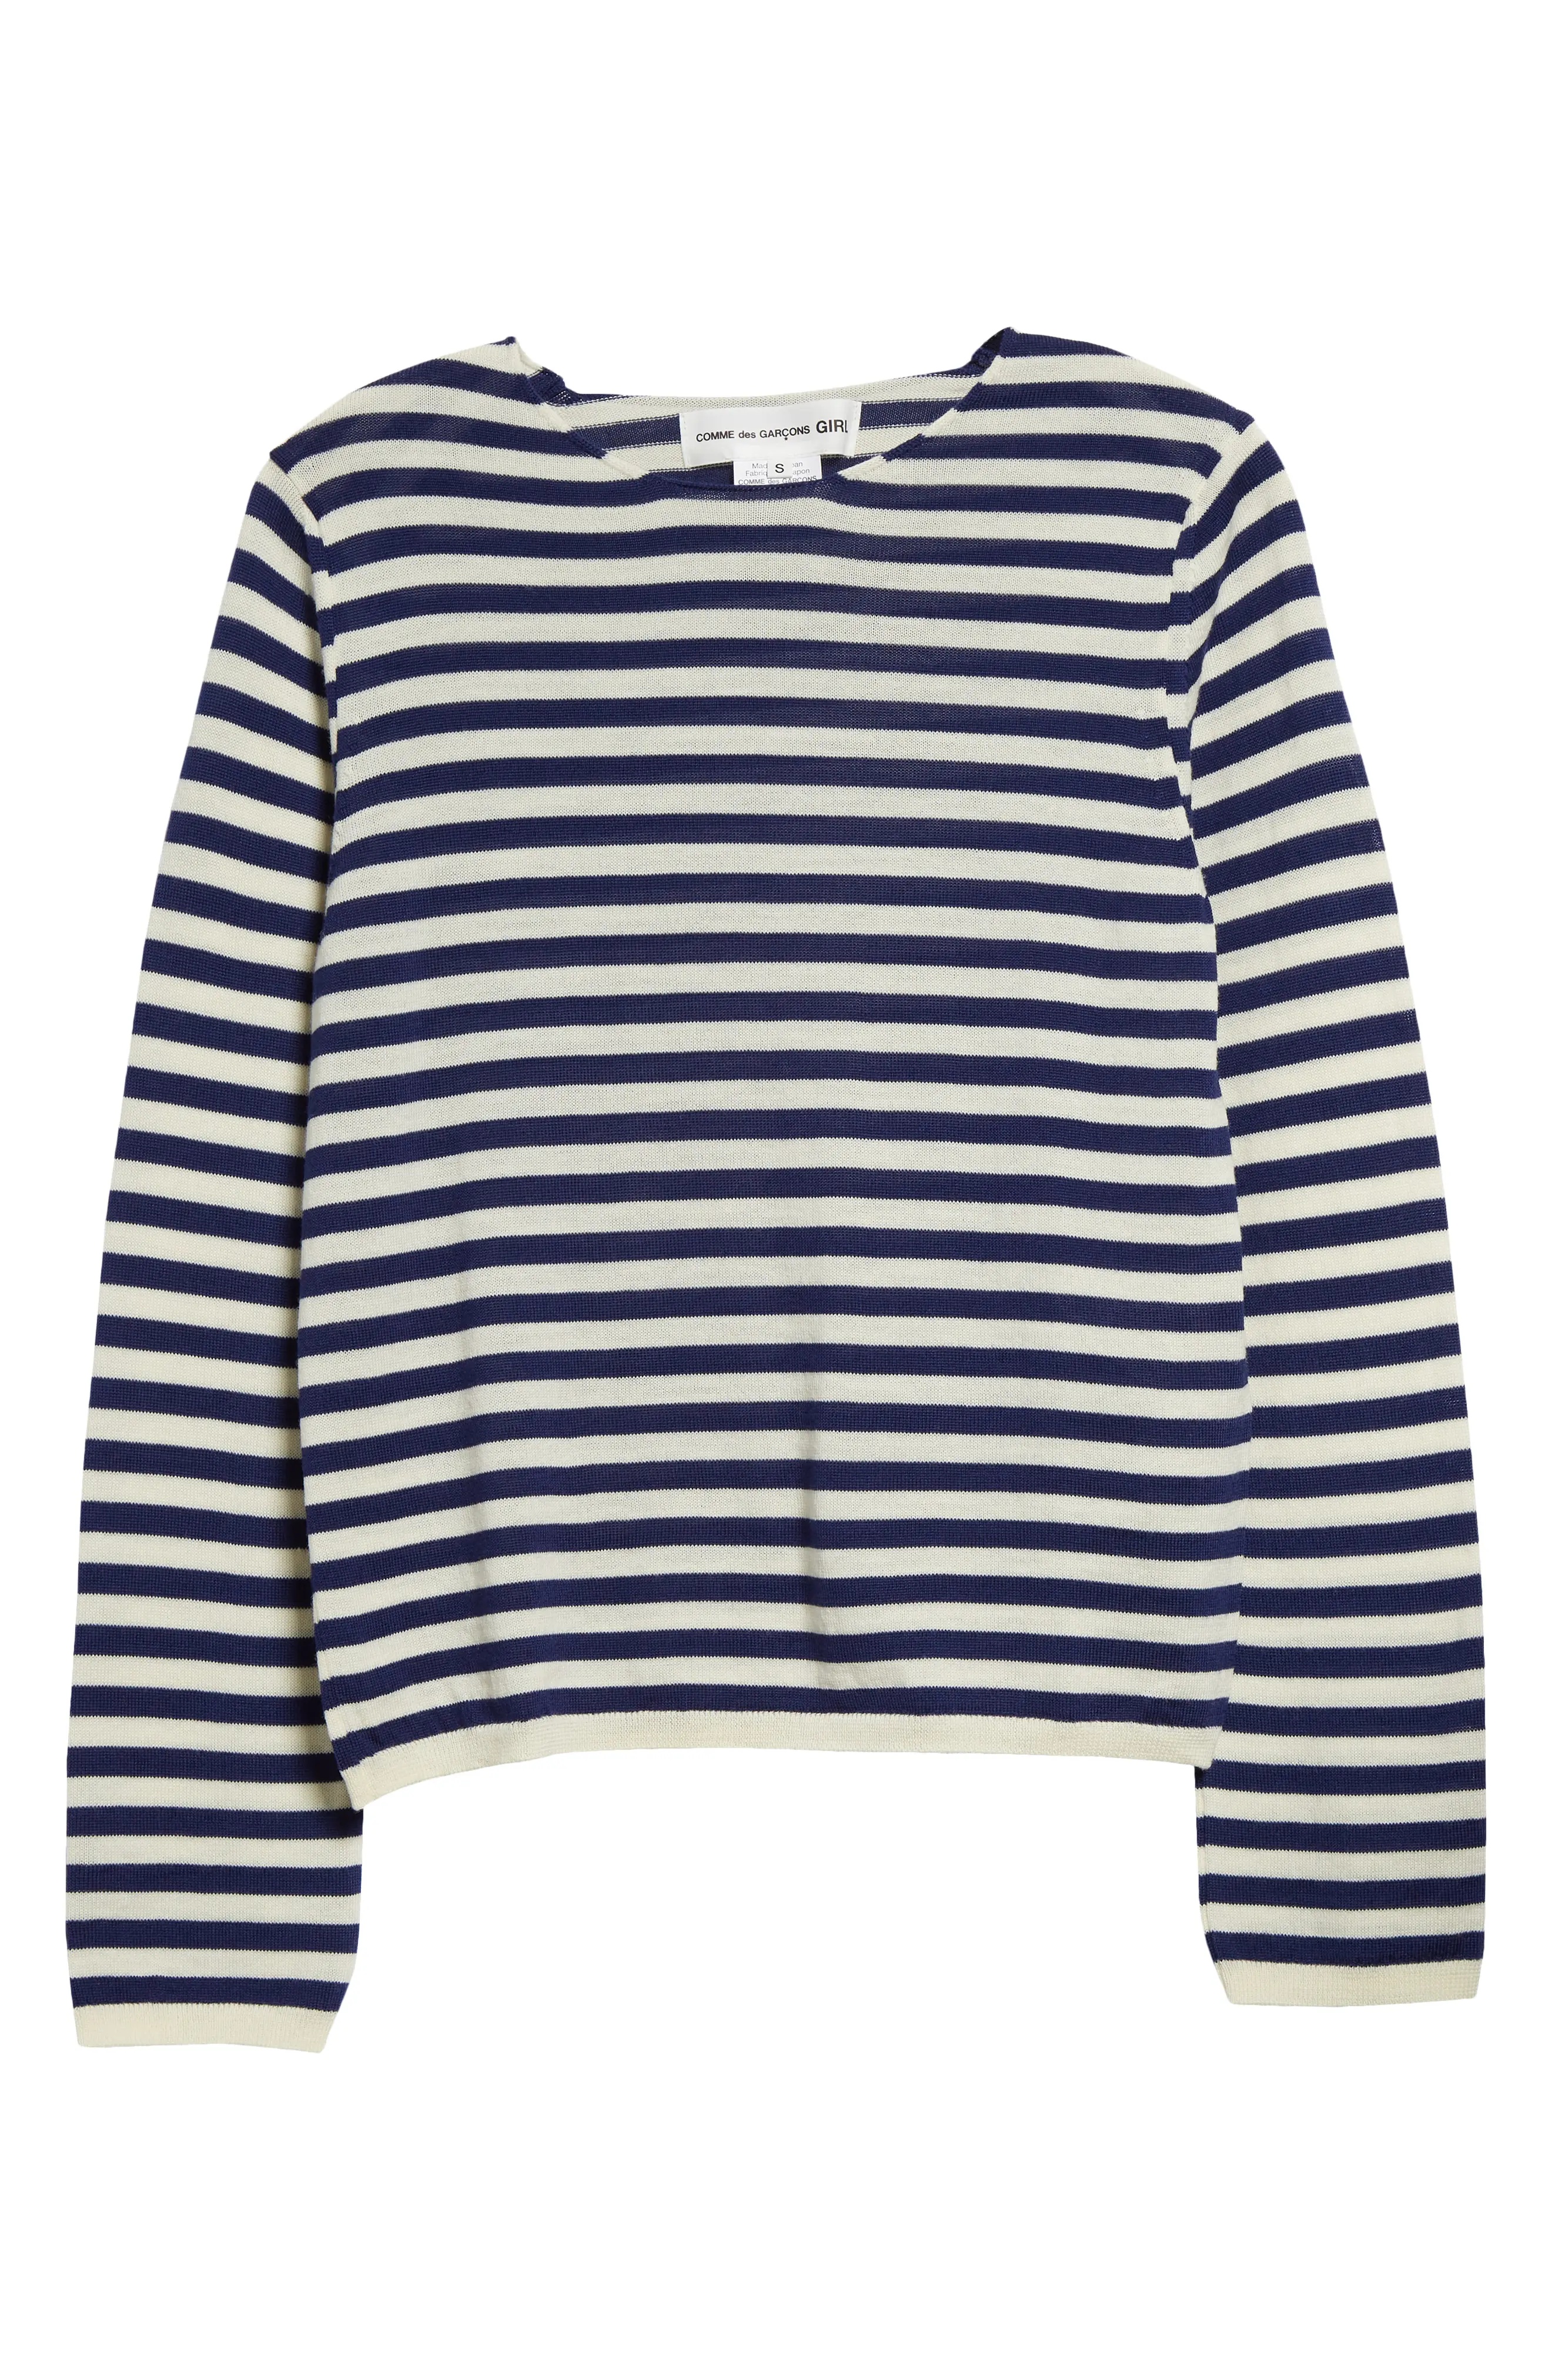 Stripe Jersey Sweater in Navy/White - 5